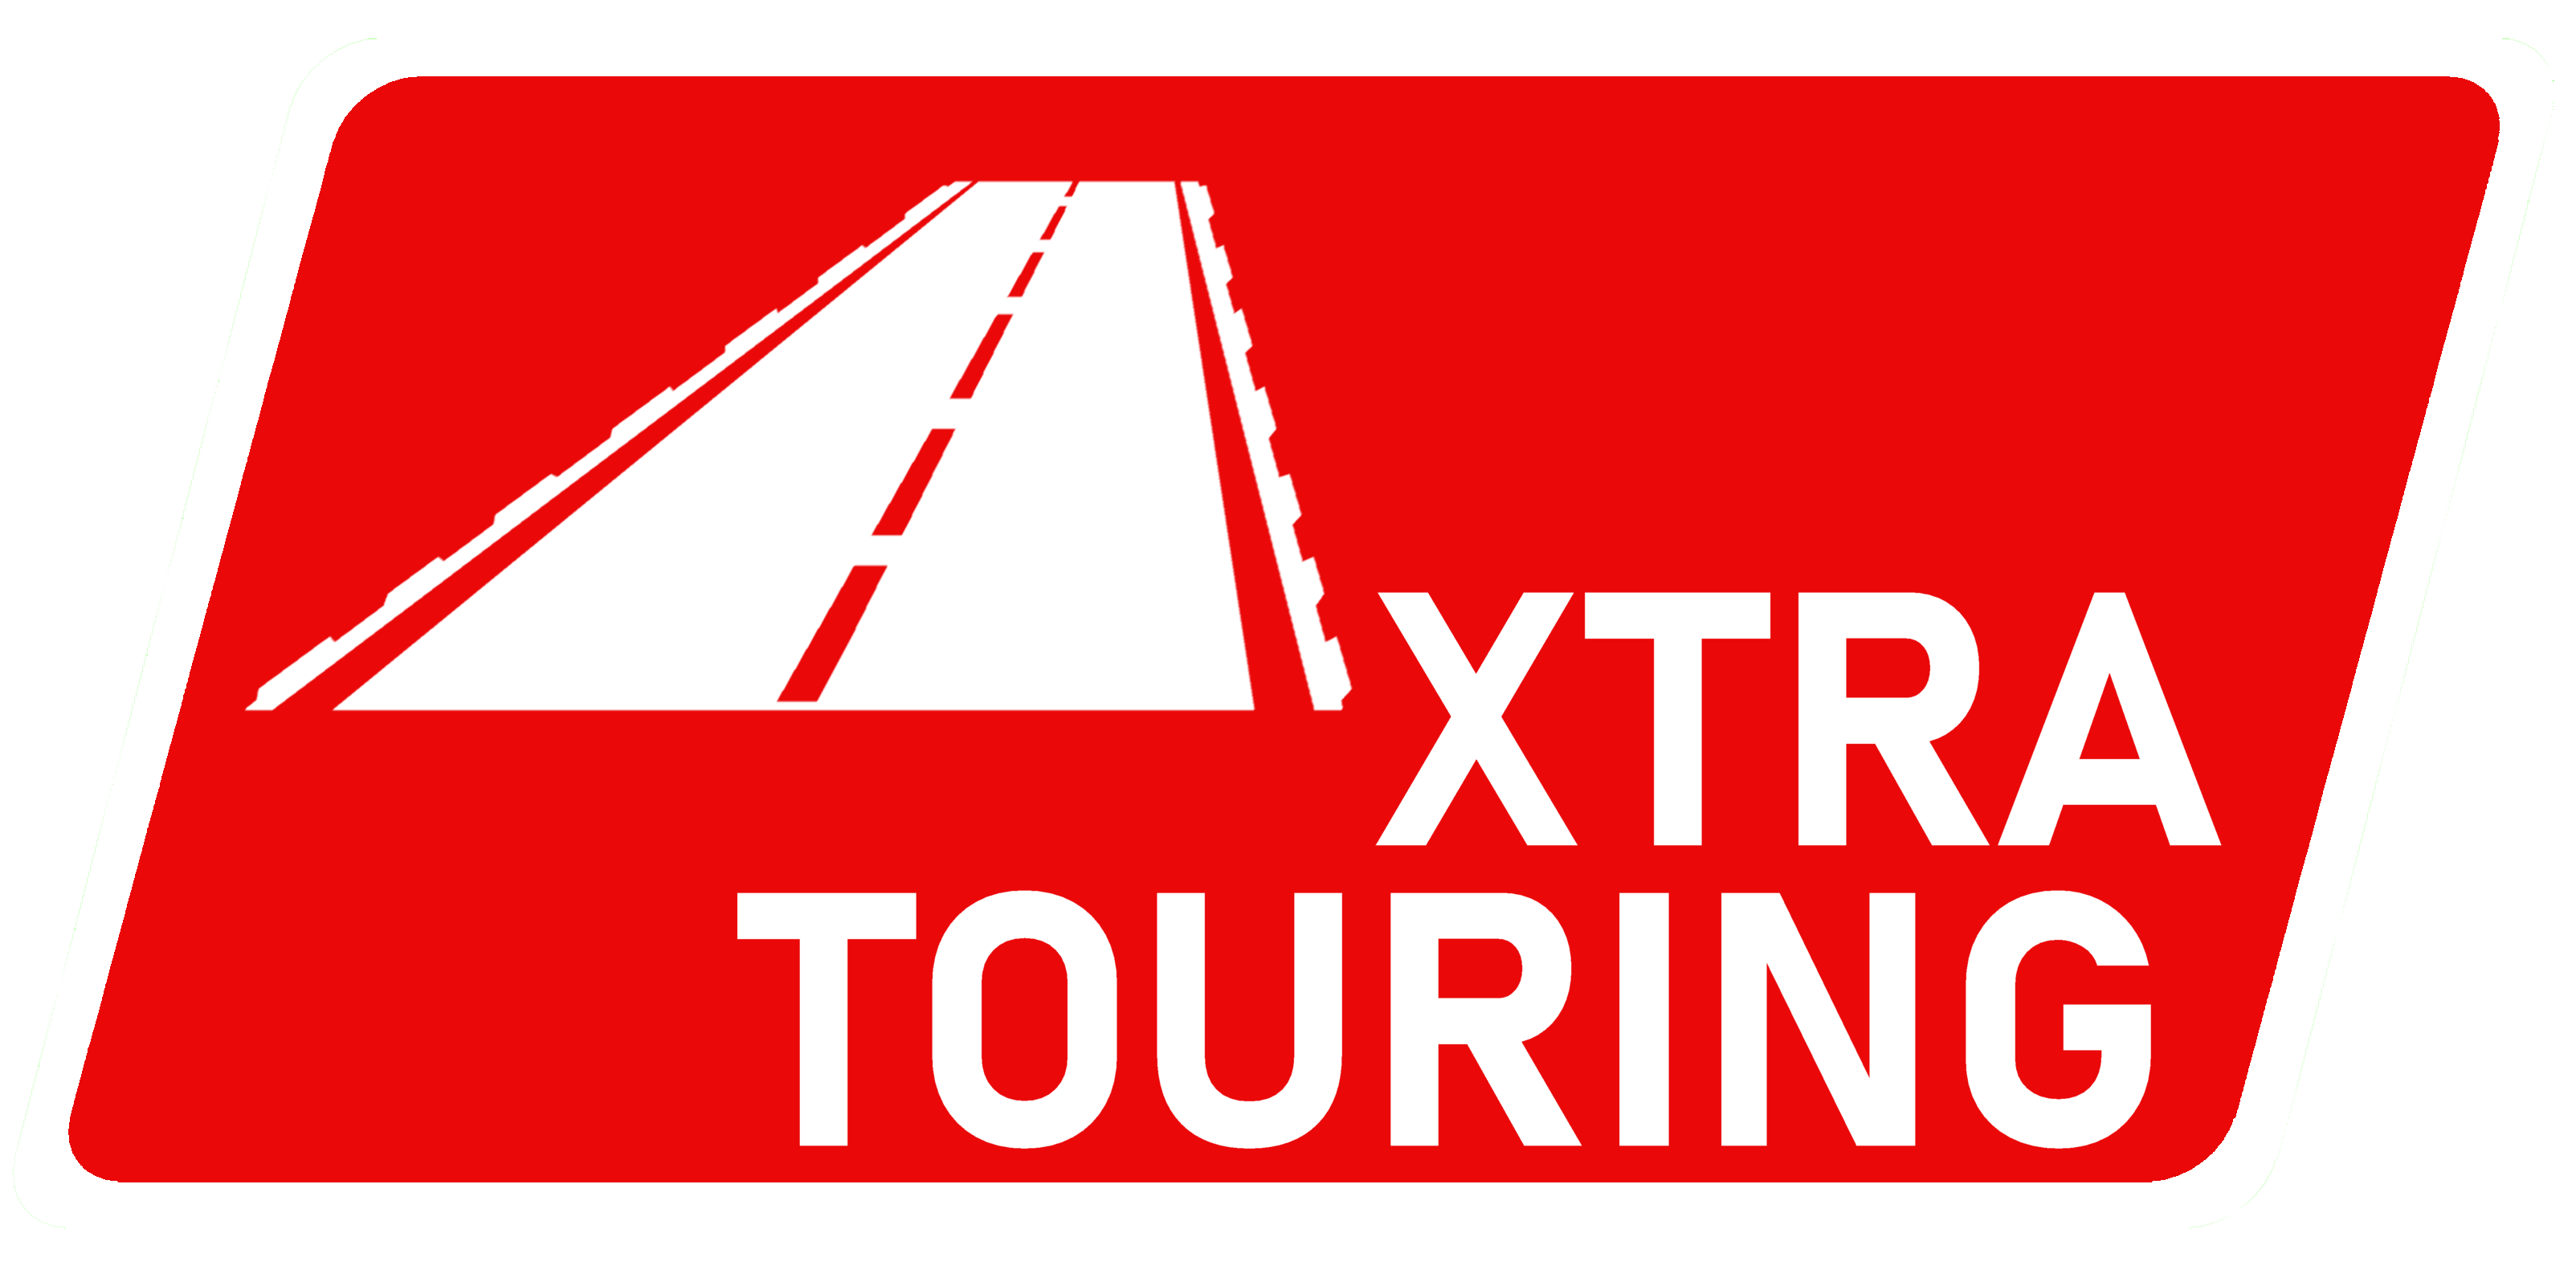 XTRA TOURING